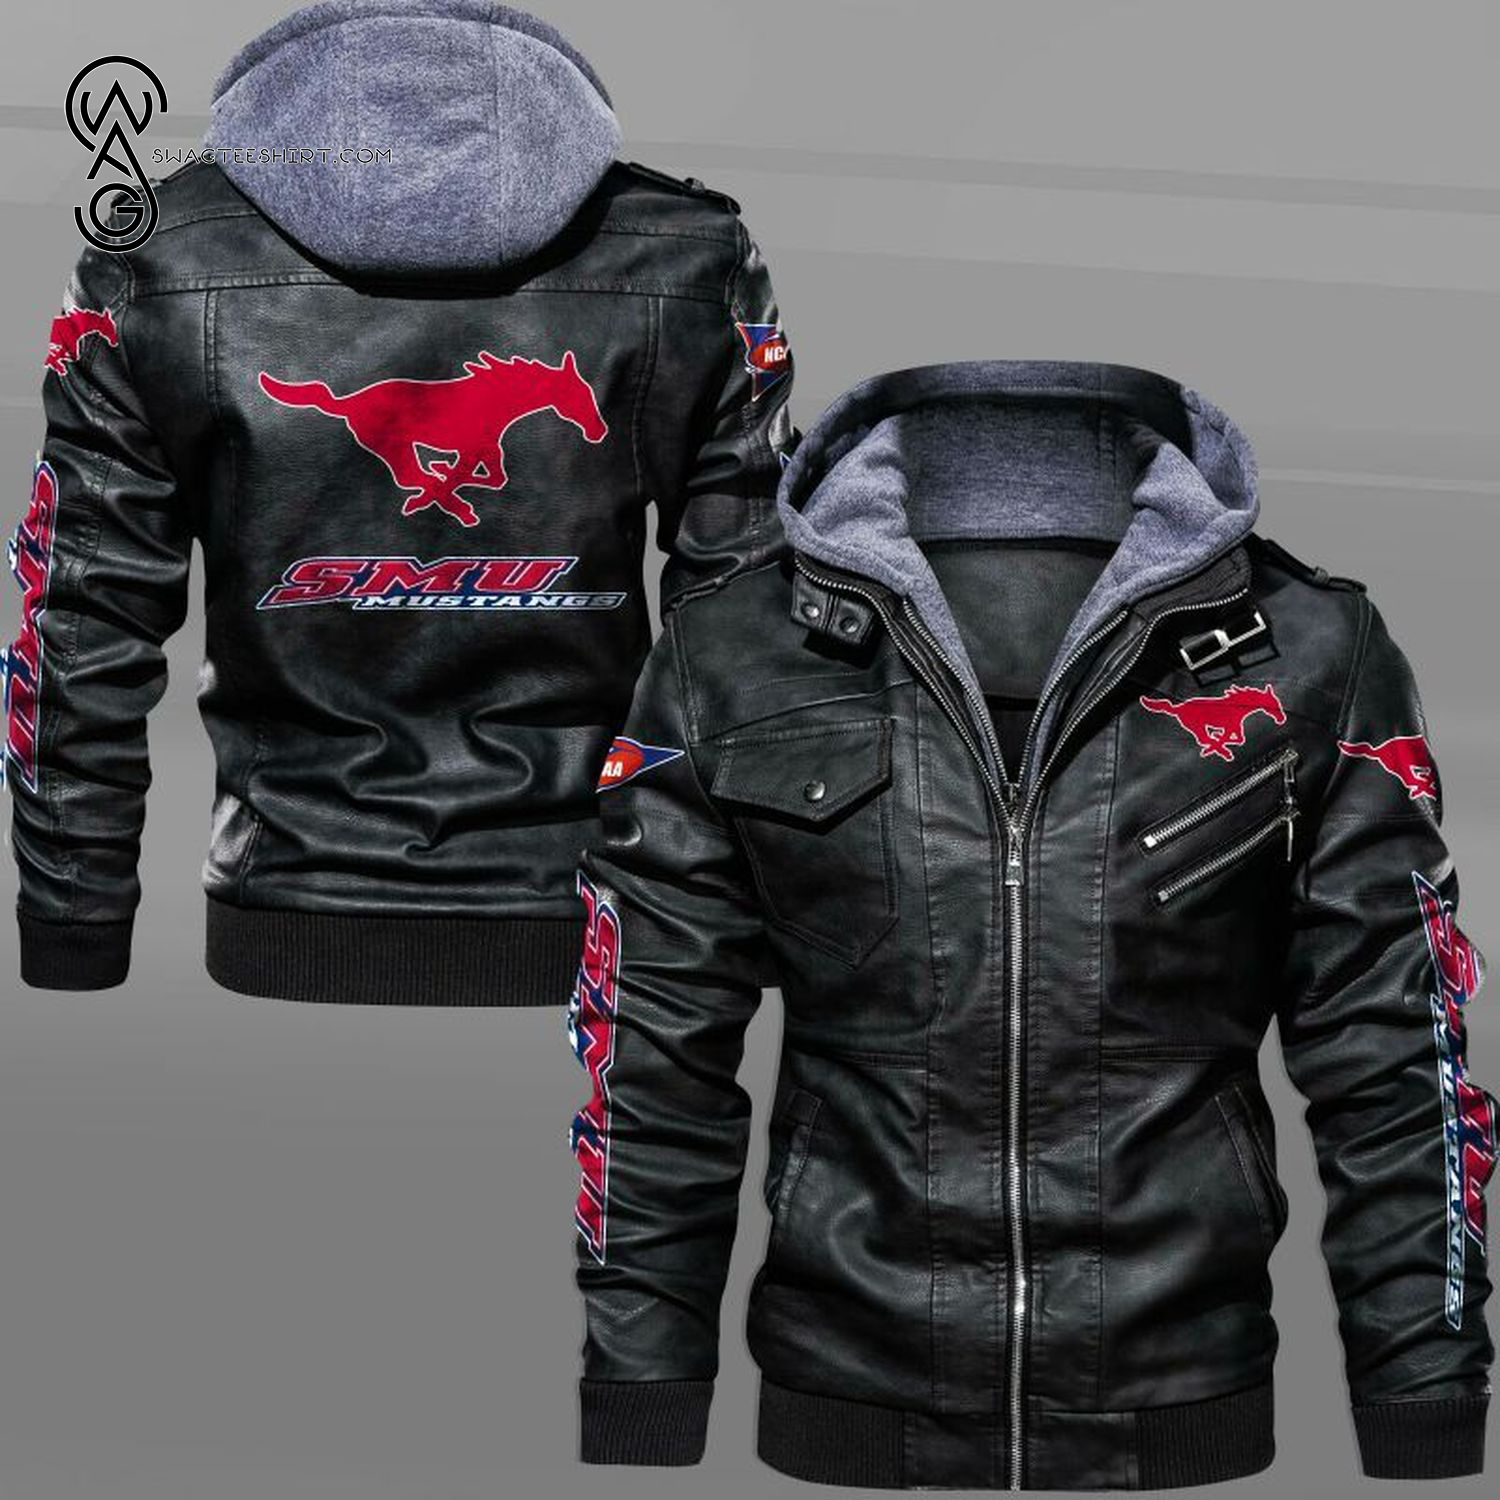 SMU Mustangs Sport Team Leather Jacket